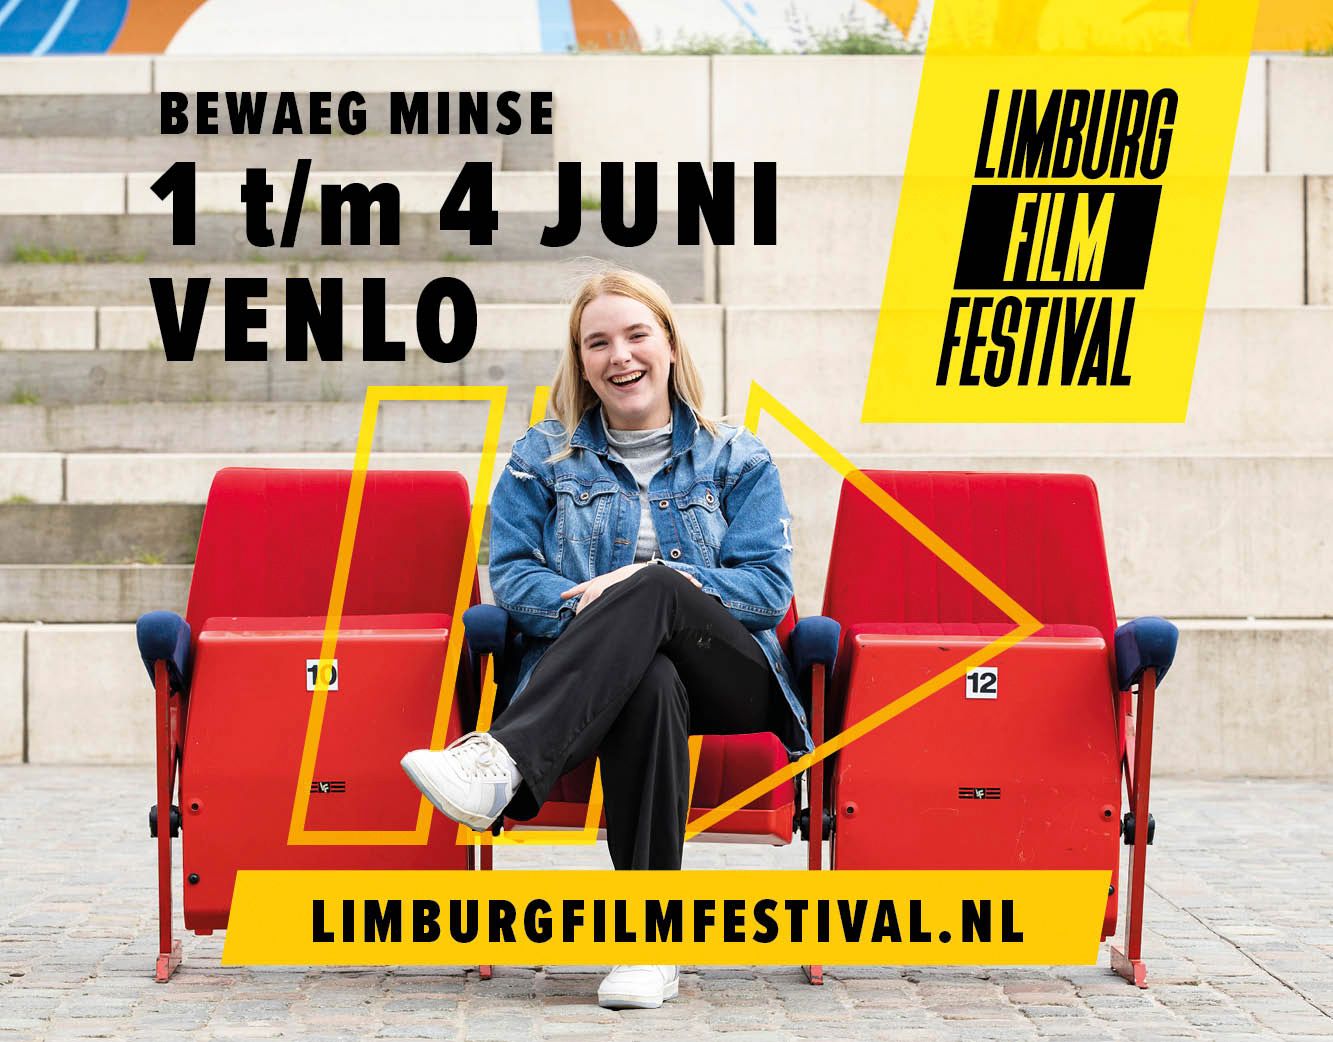 Limburg film festival